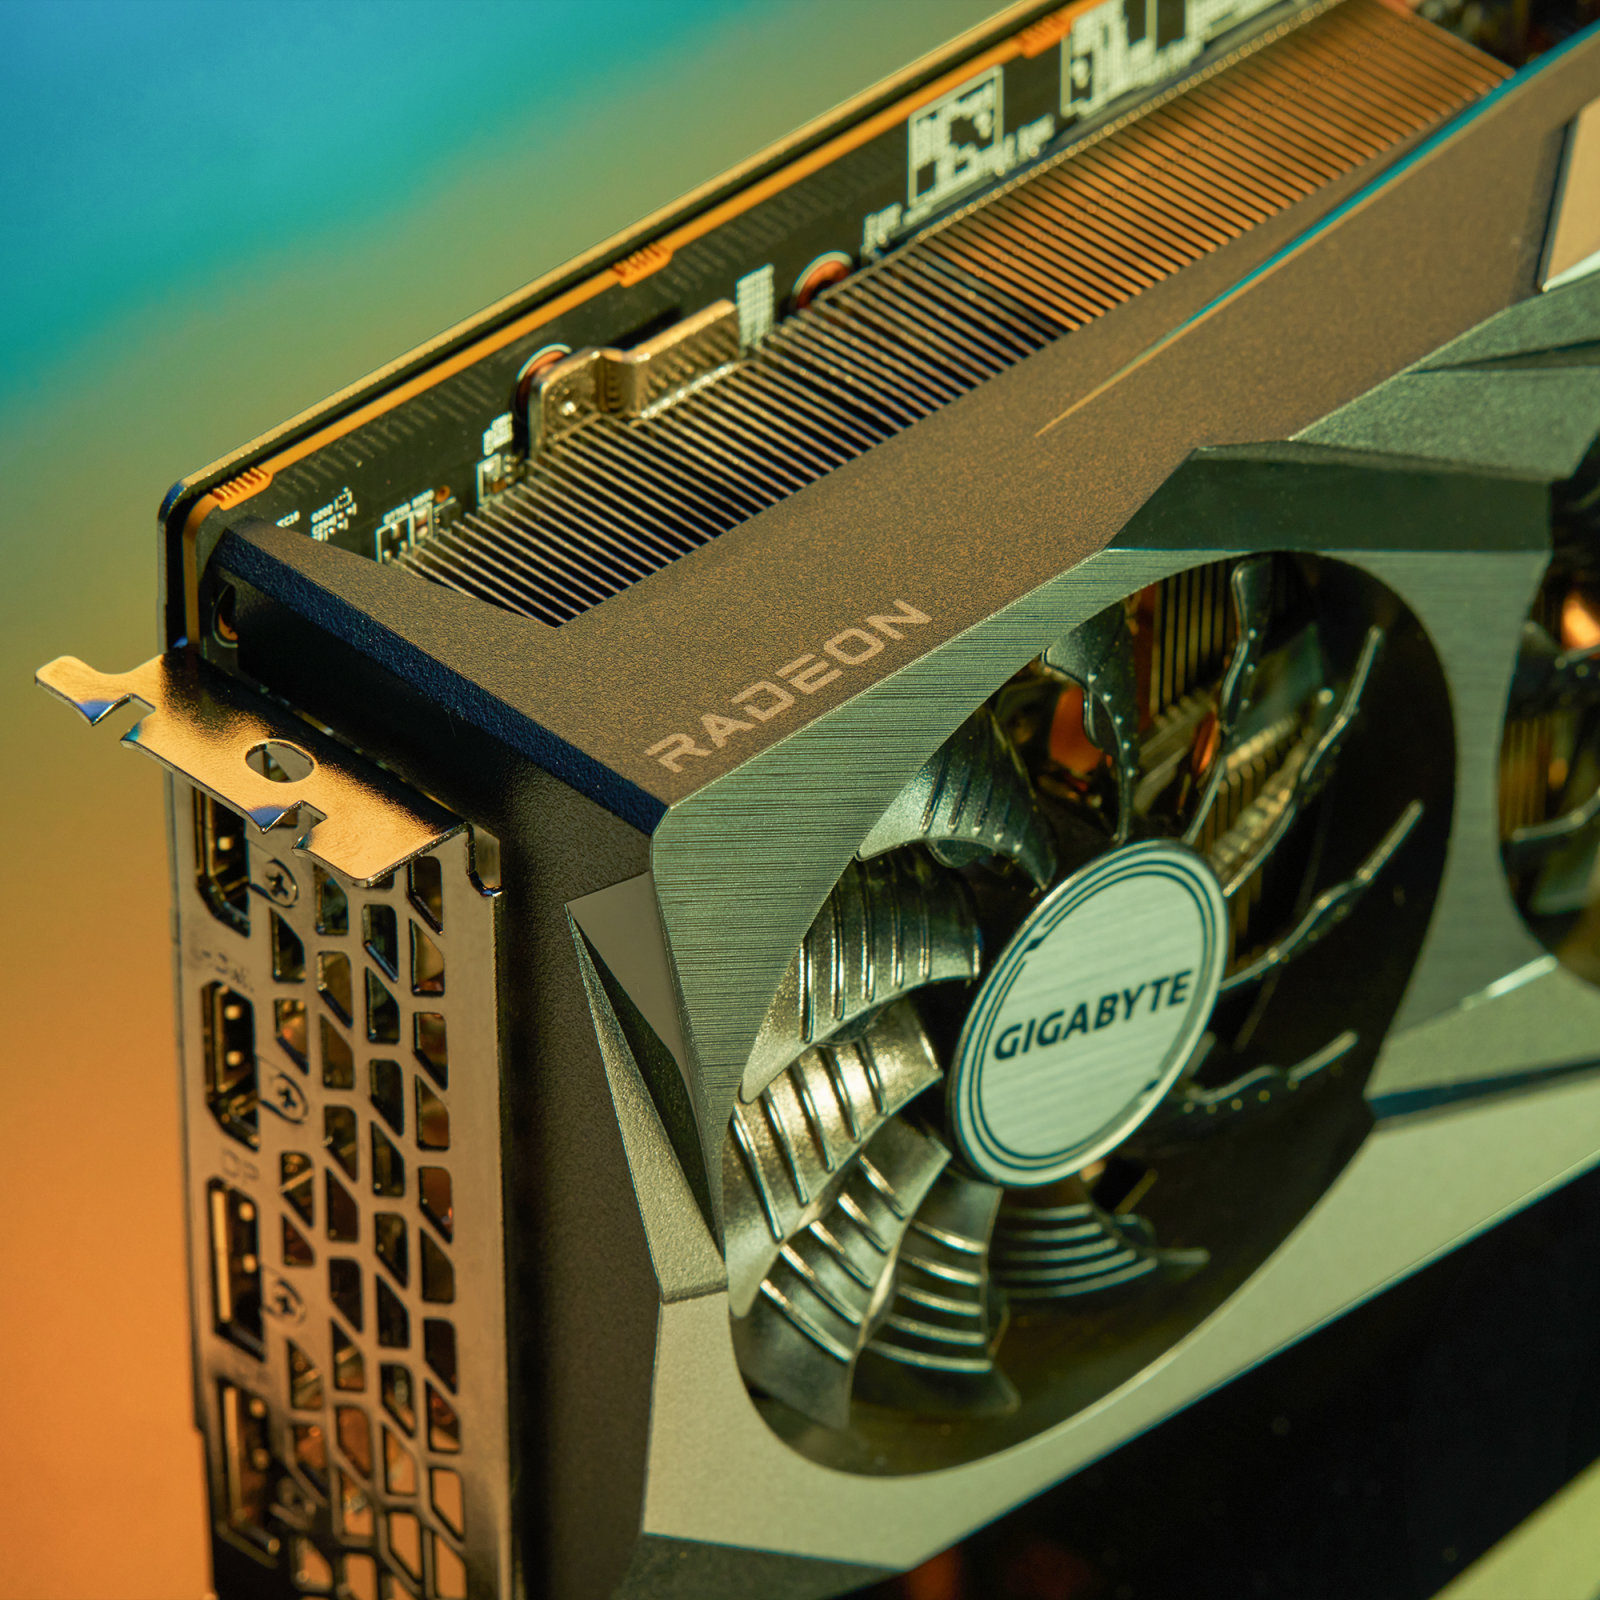 GIGABYTE announces Radeon RX 6800 AORUS Master and GAMING OC